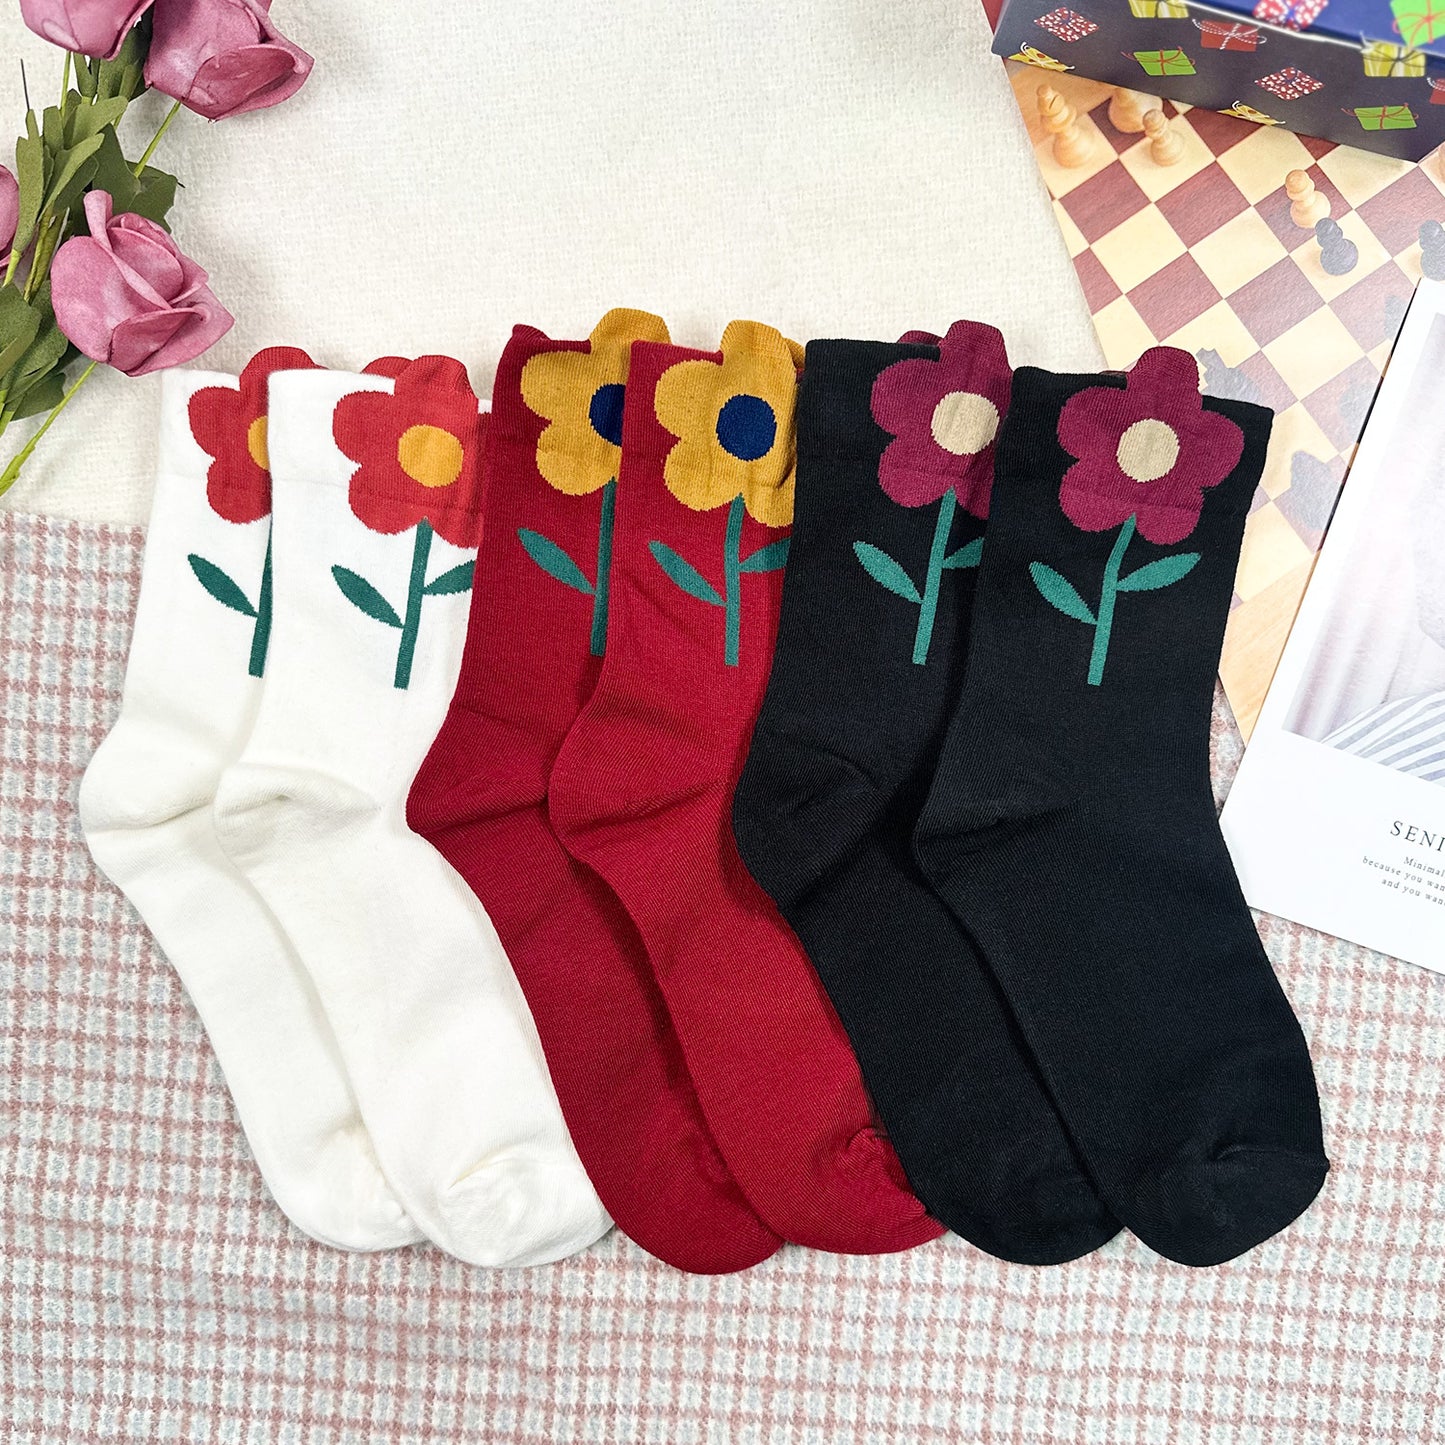 Women's Crew New Big Flower Socks